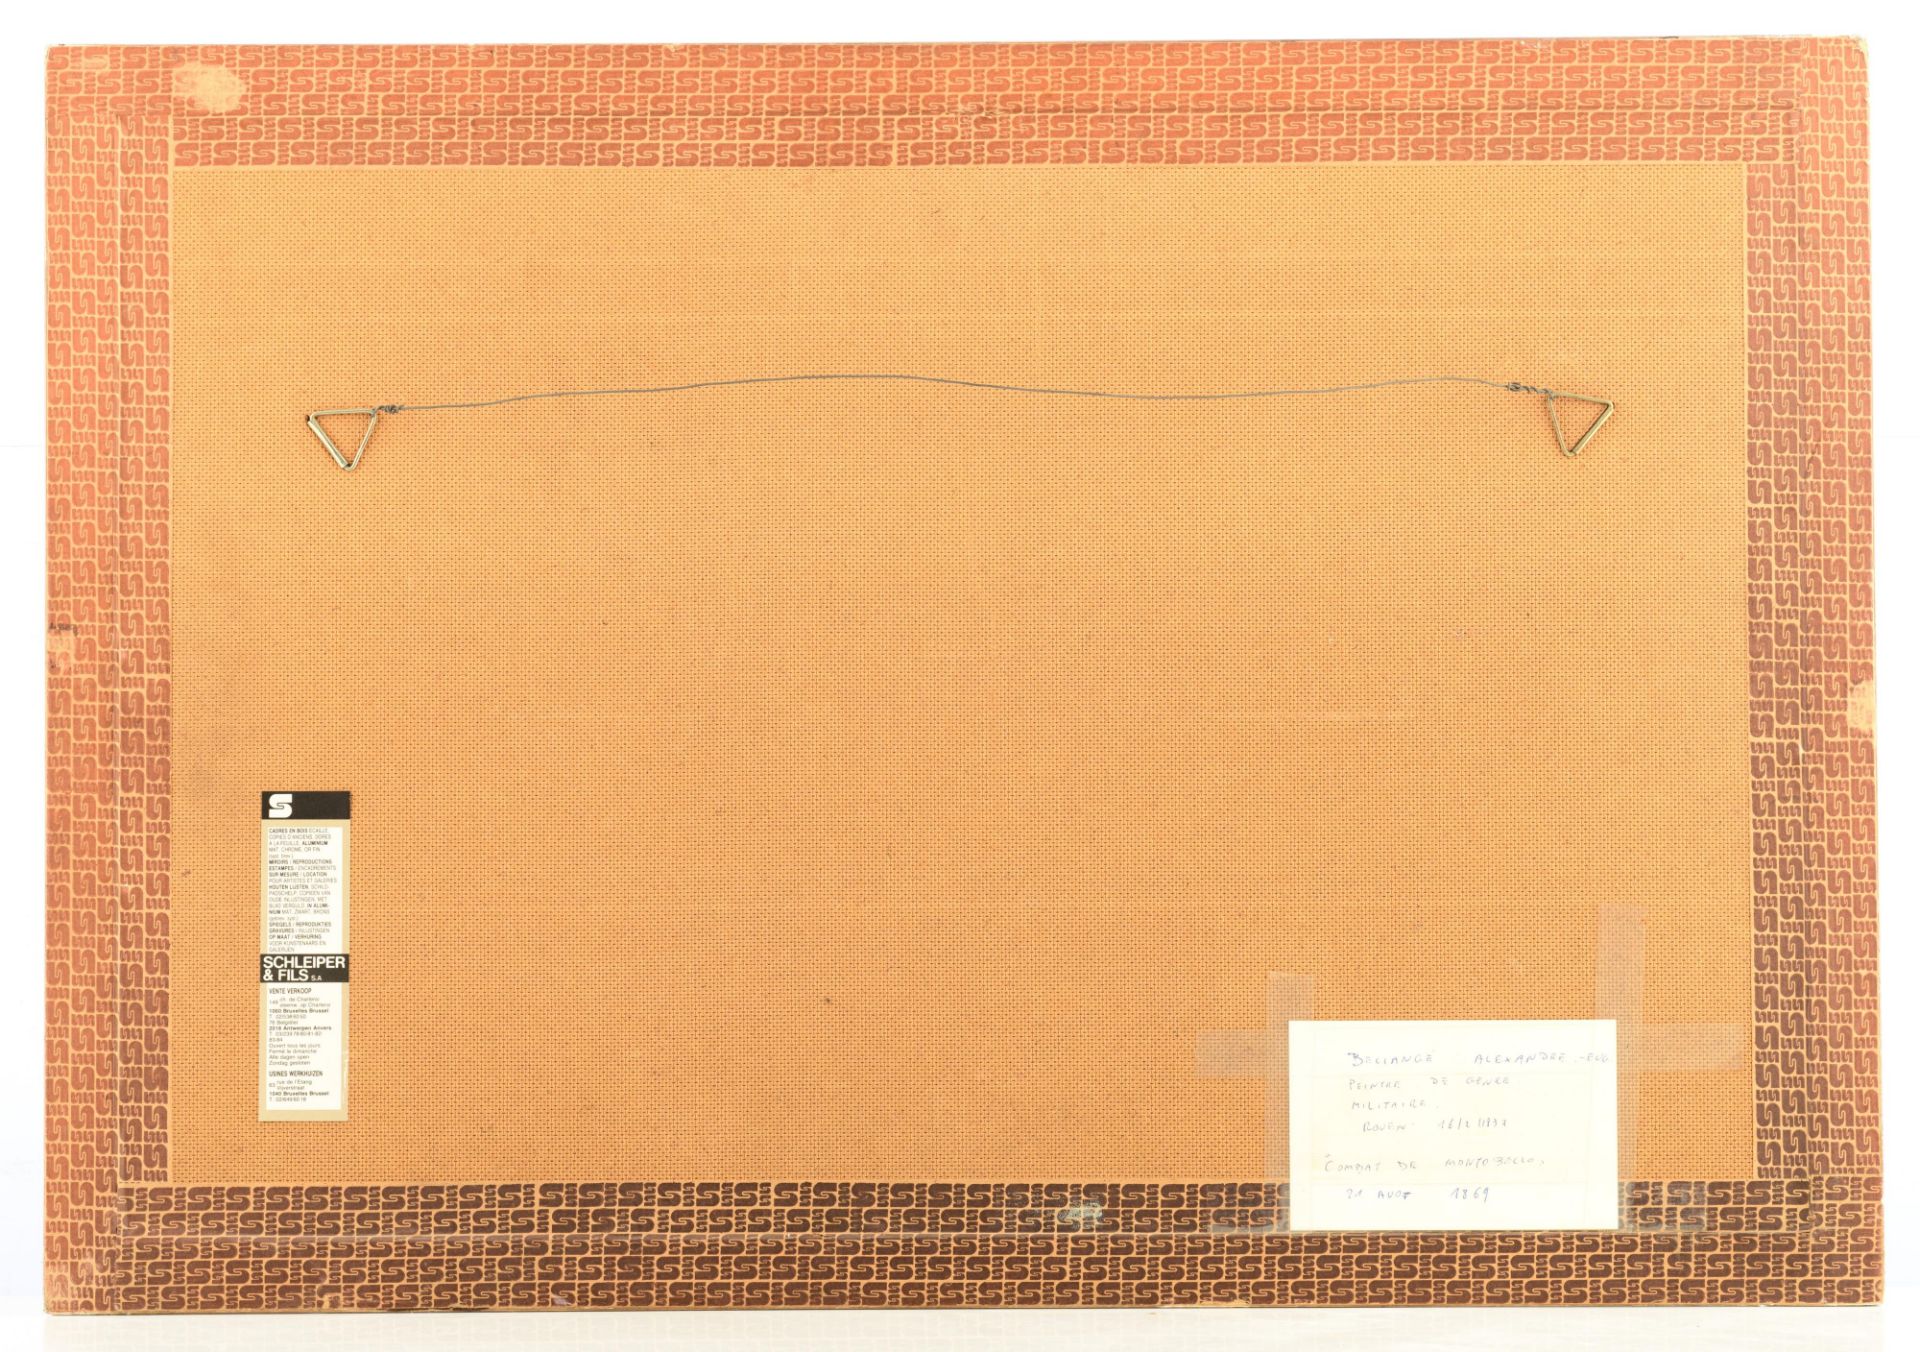 Bellang‚ A., 'Combat de Montebello', pencil and ink on paper, 30 x 52 cm - Image 3 of 7